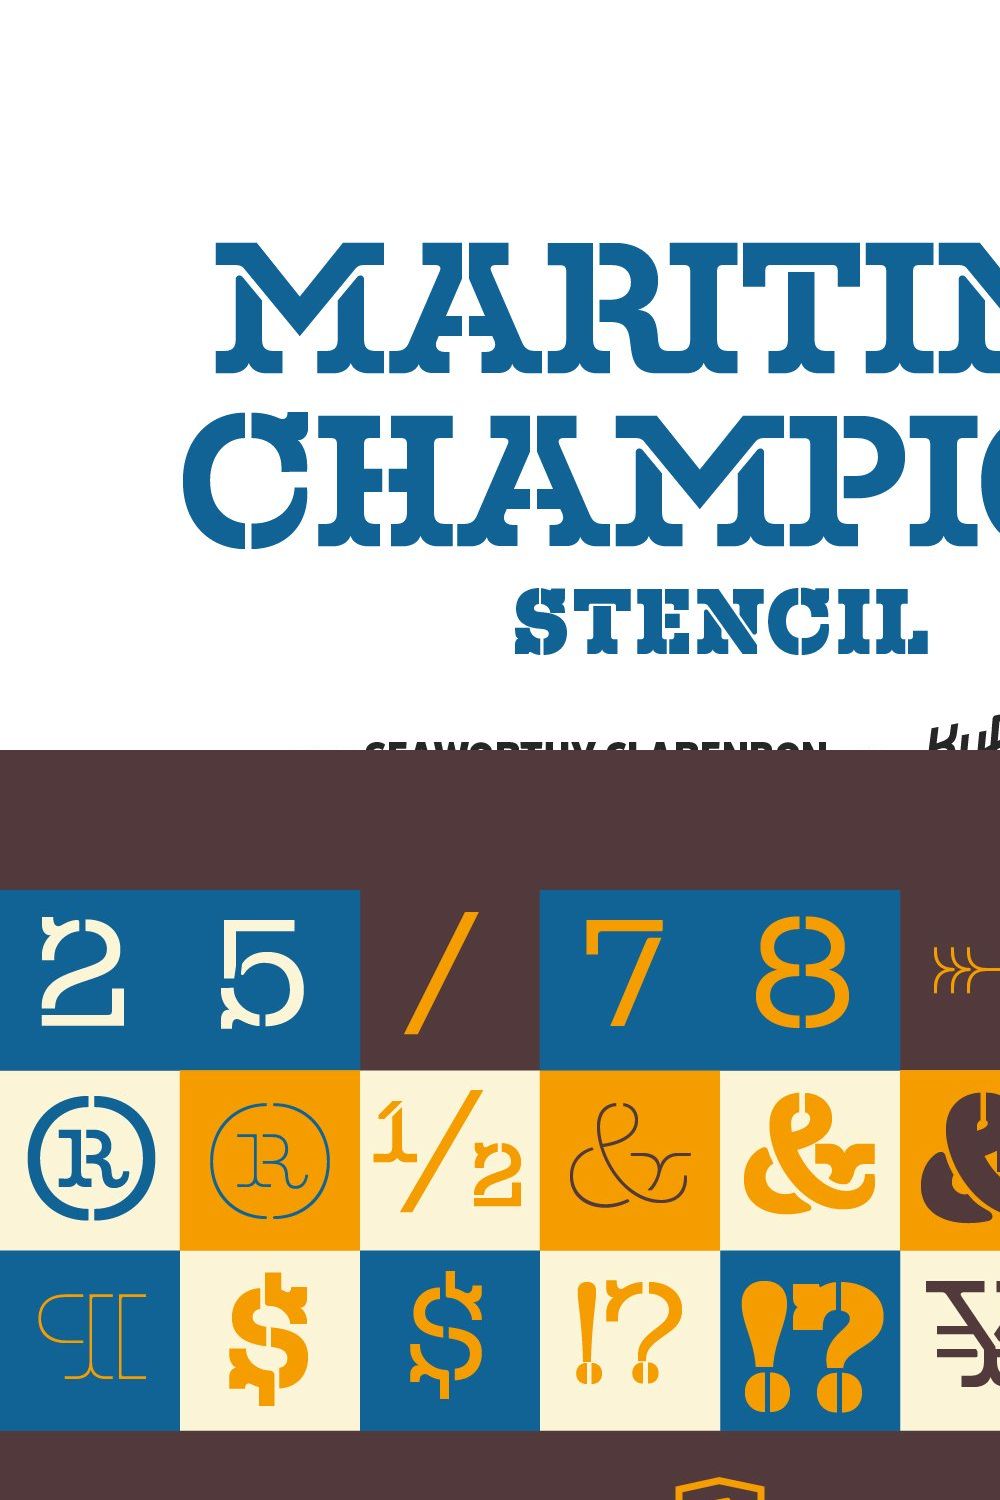 Maritime Champion Stencil pinterest preview image.